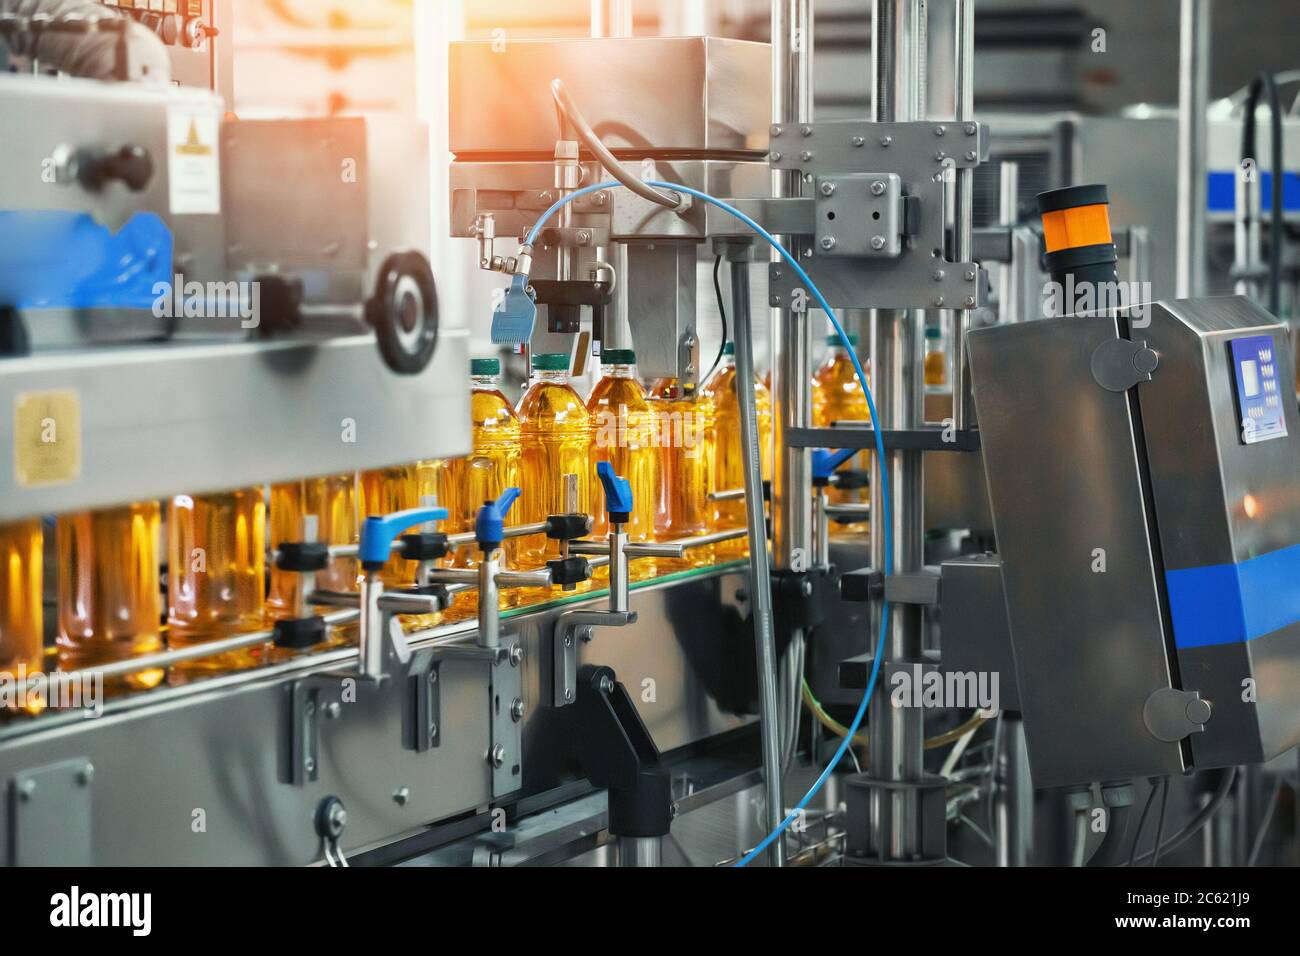 Juice in bottles on Conveyor belt, beverage factory interior, industrial production line. Stock Photo